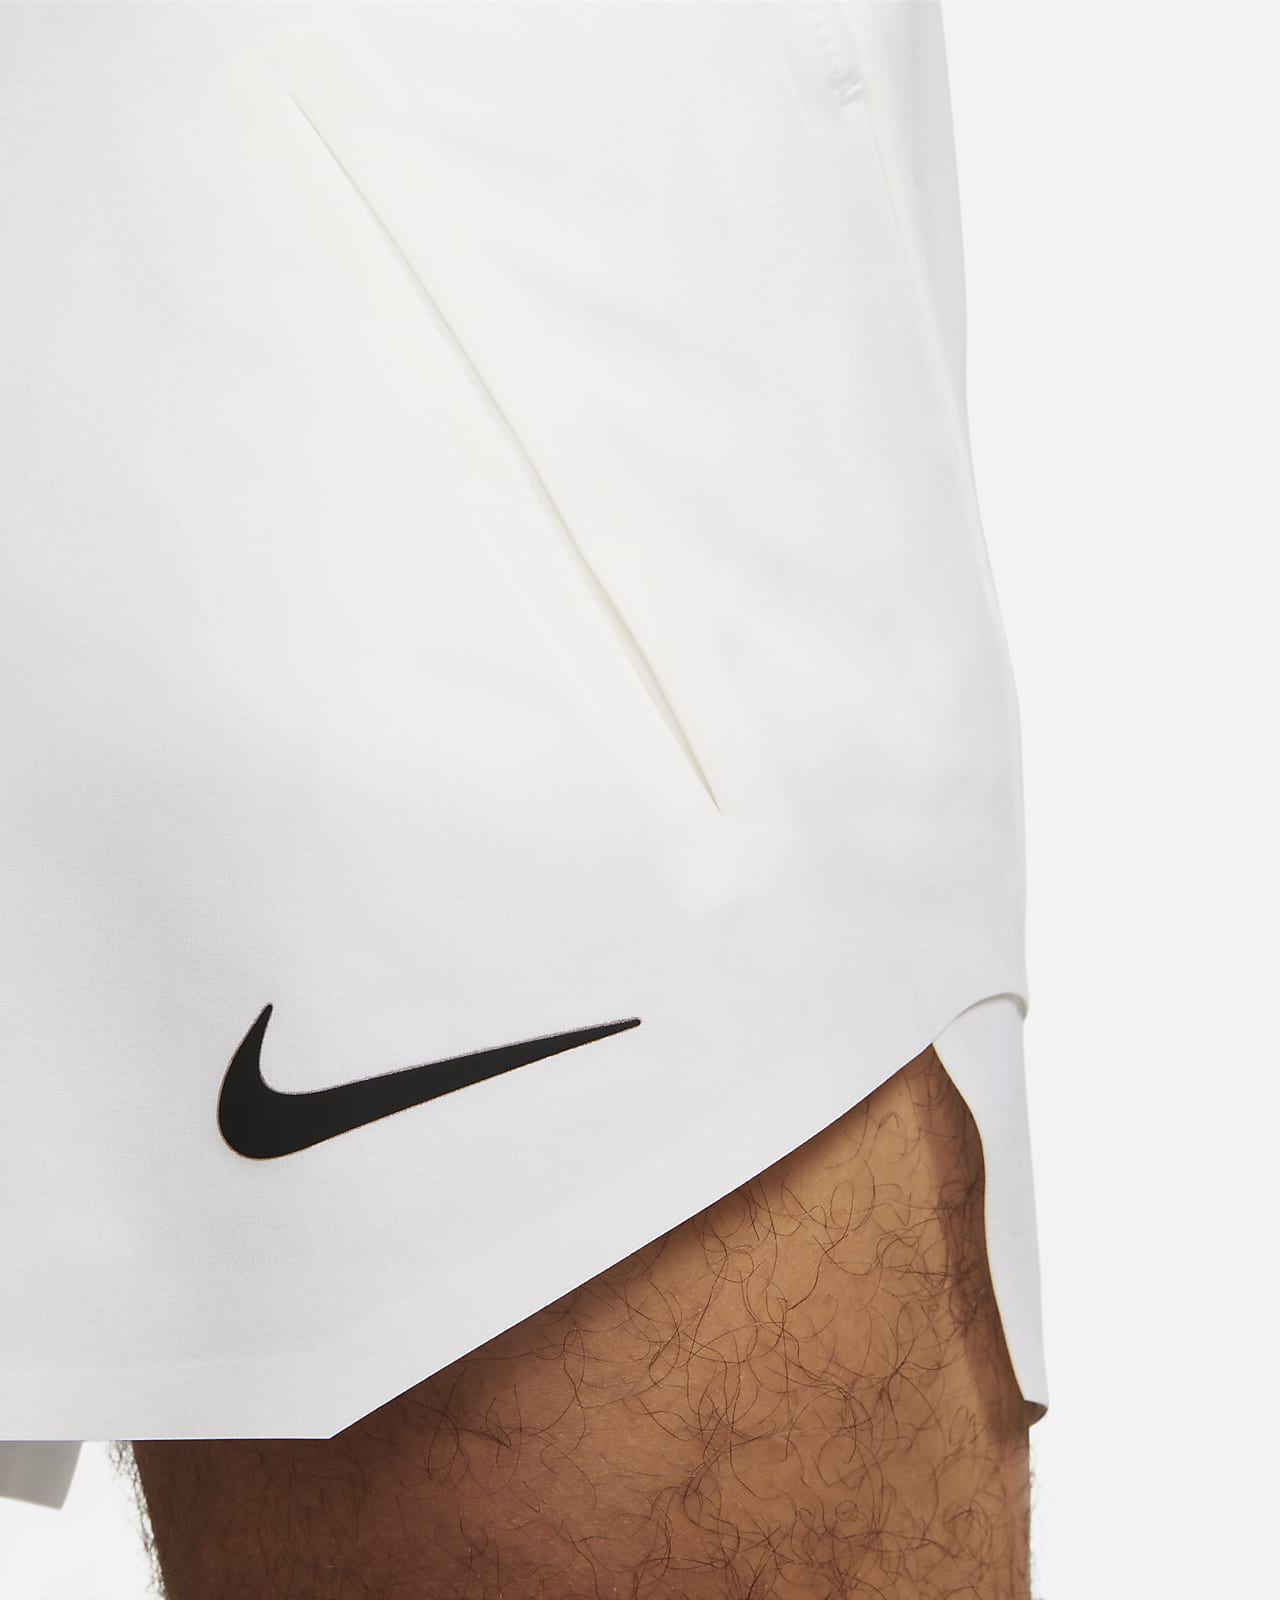 NWT Nike Men's Dri-Fit White Tennis Shorts - Standard Fit Size XL